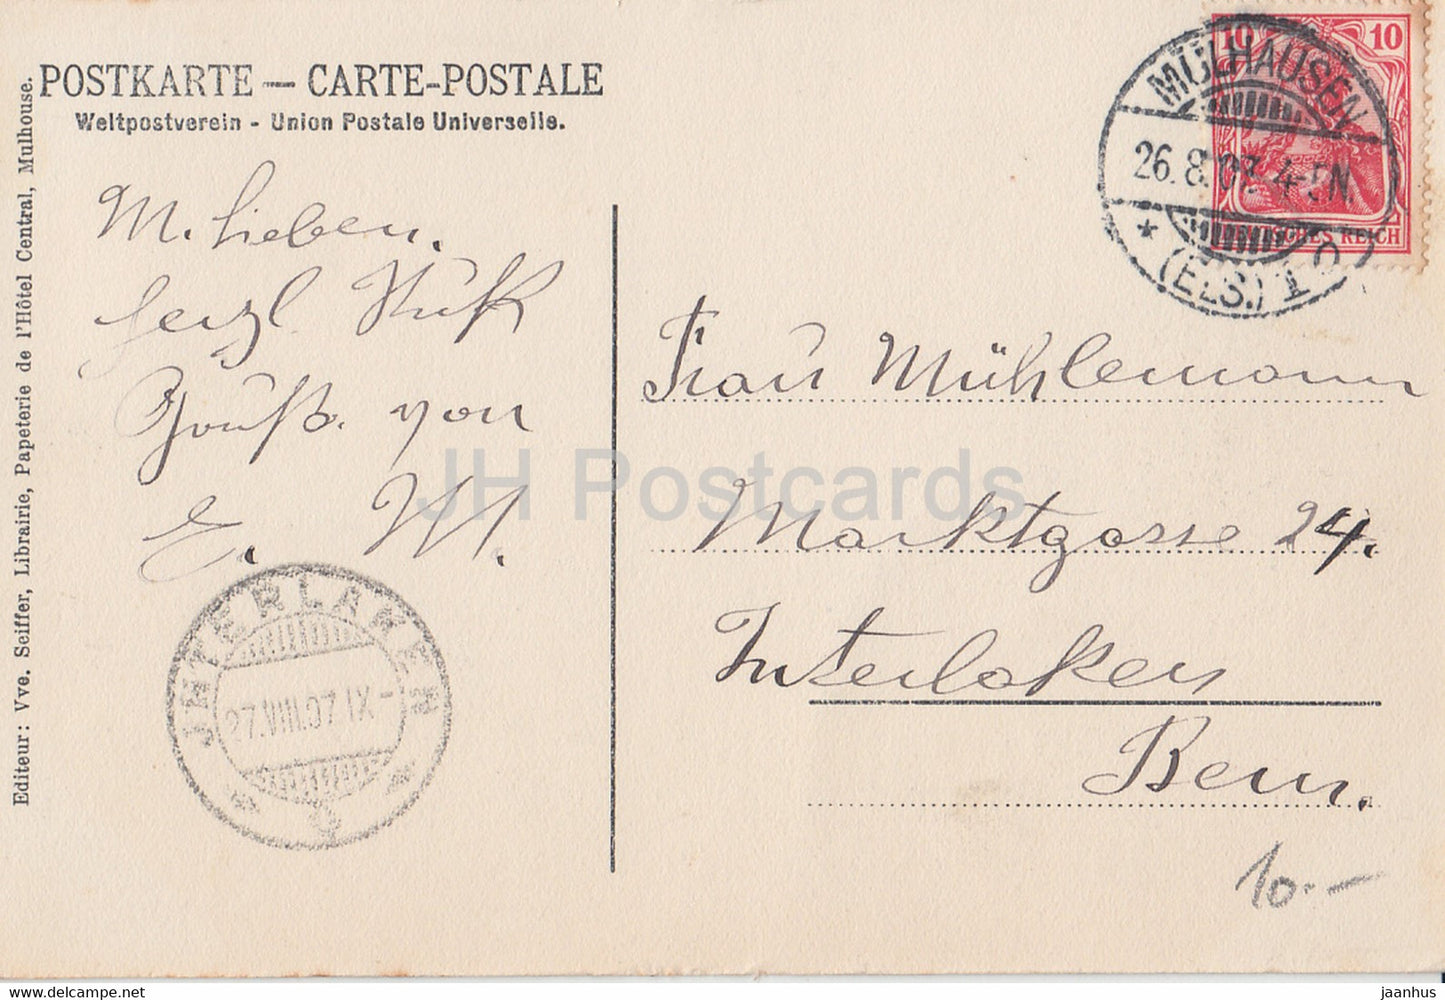 Mulhausen i Els - Mulhouse - La Poste et Bassin - Die Post und Kanal - old postcard - 1907 - France - used